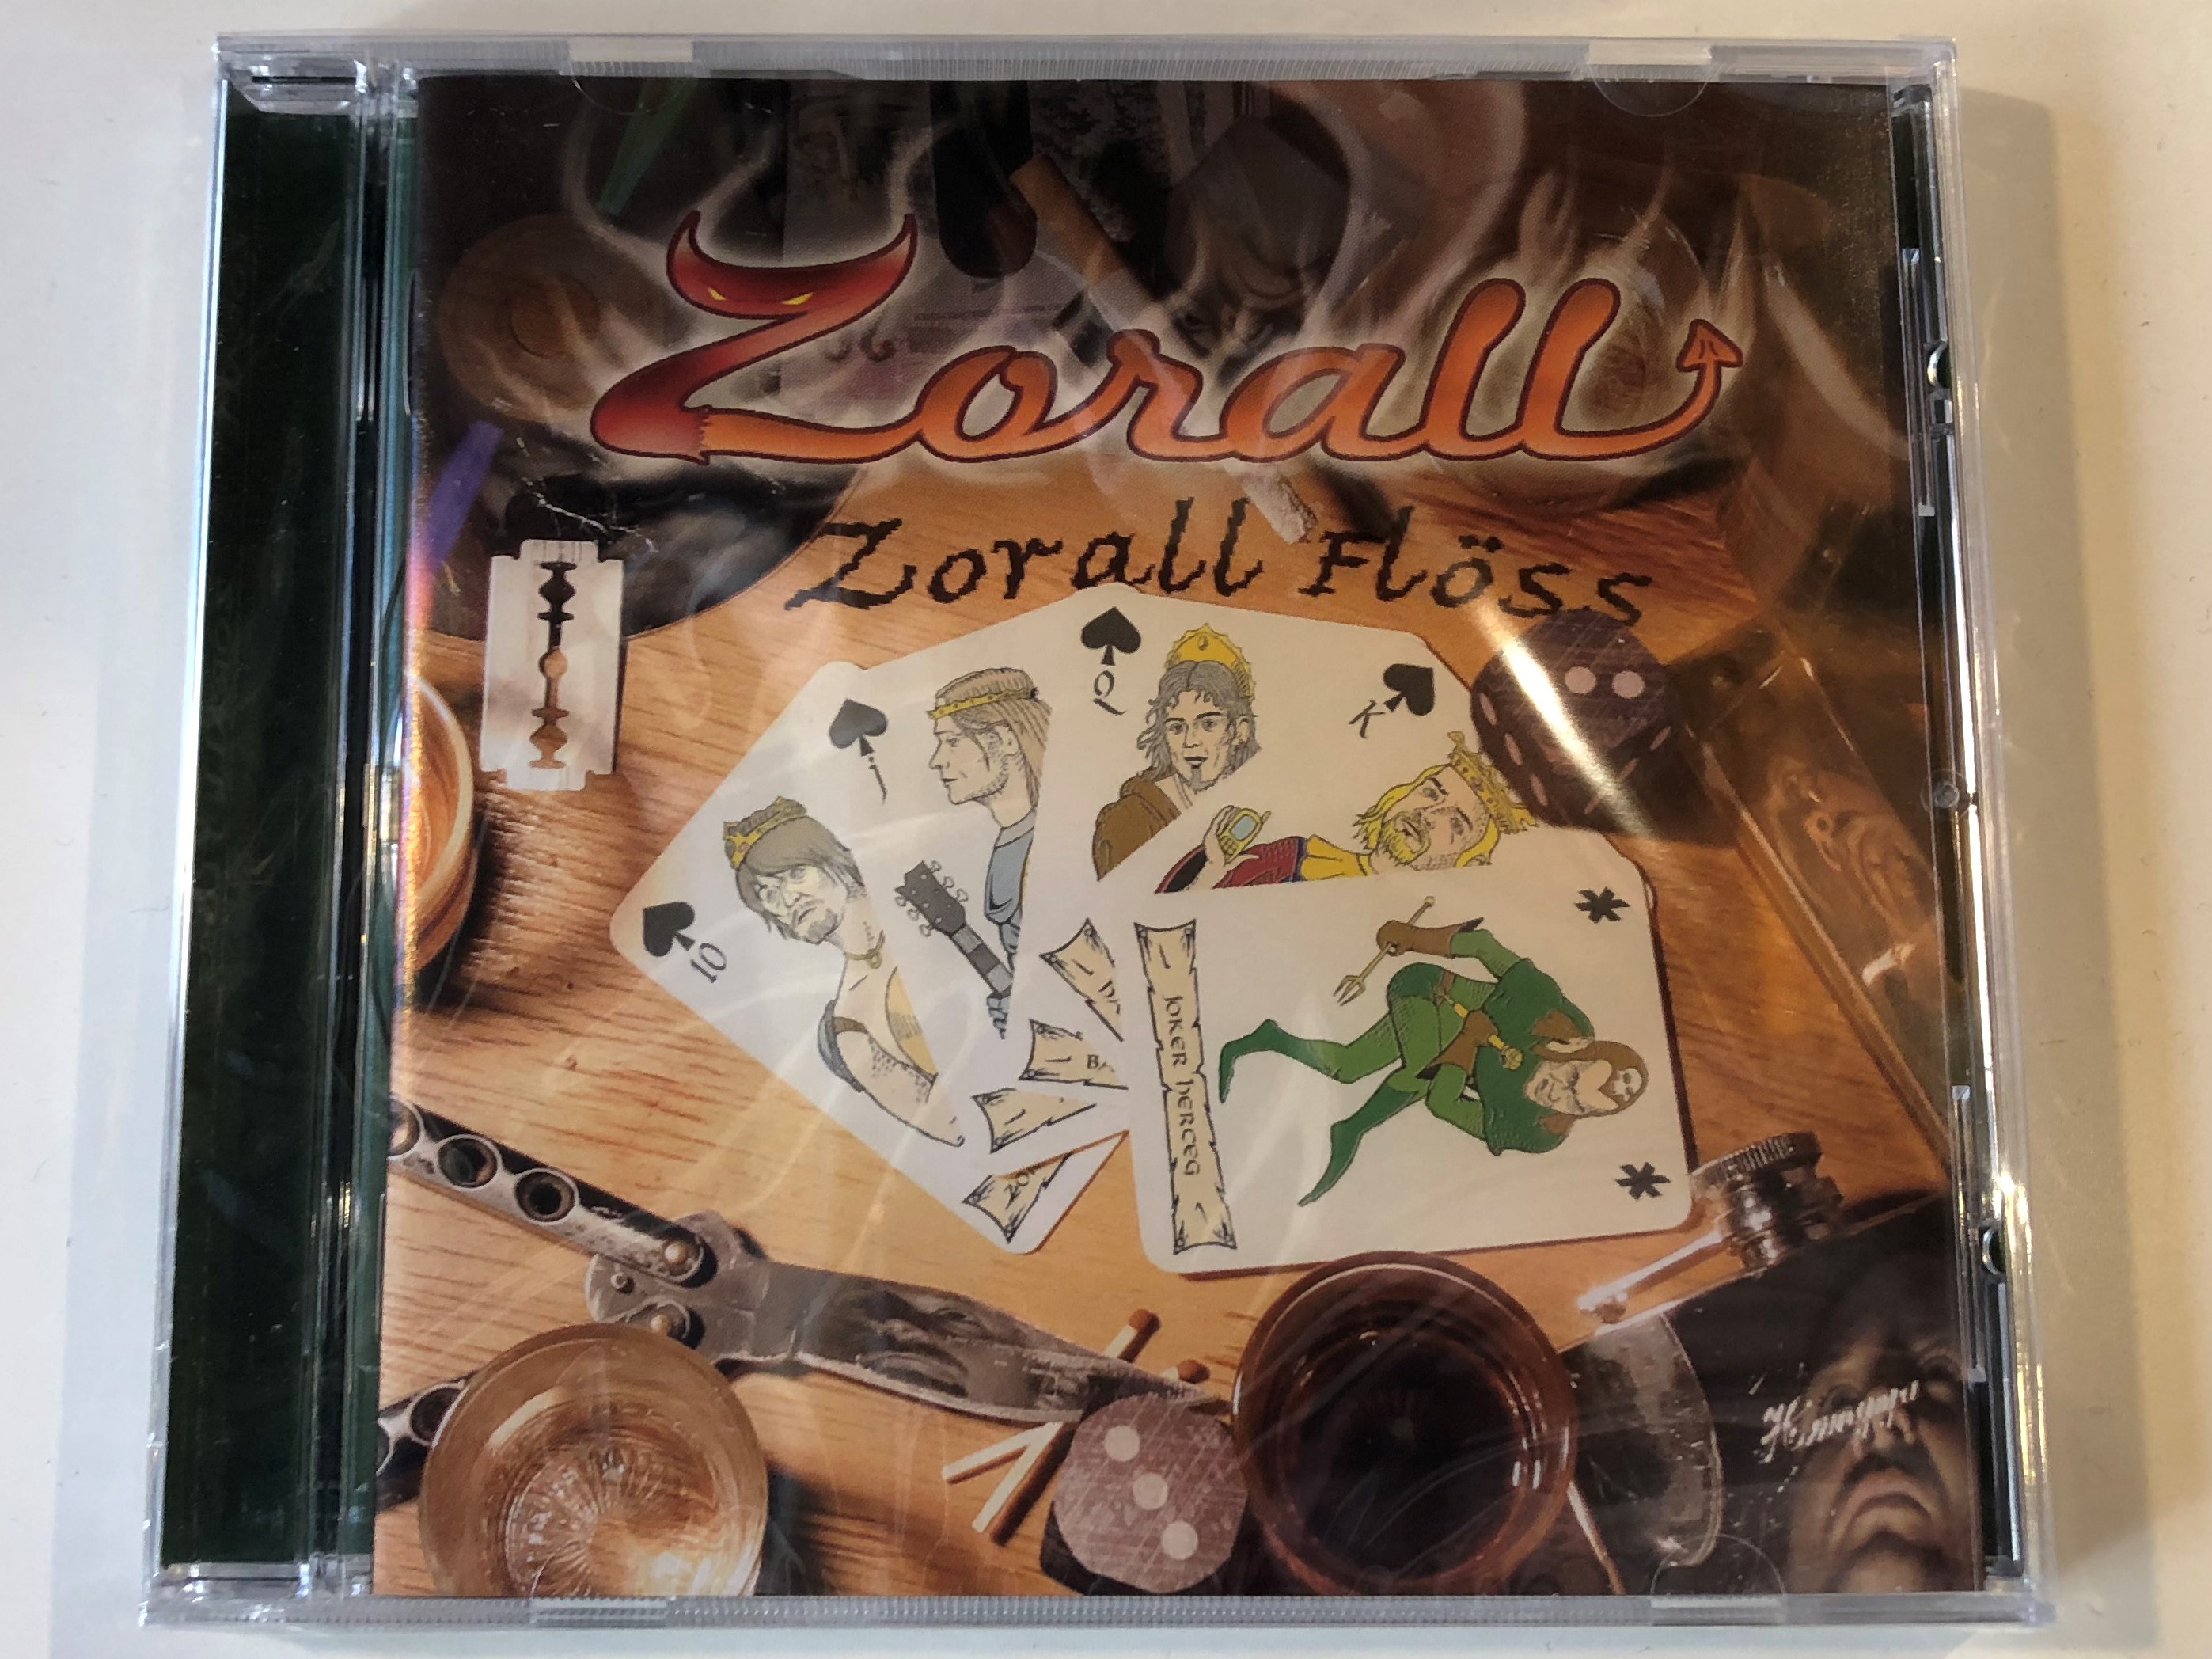 zorall-zorall-fl-ss-ff-film-music-audio-cd-731406878329-1-.jpg